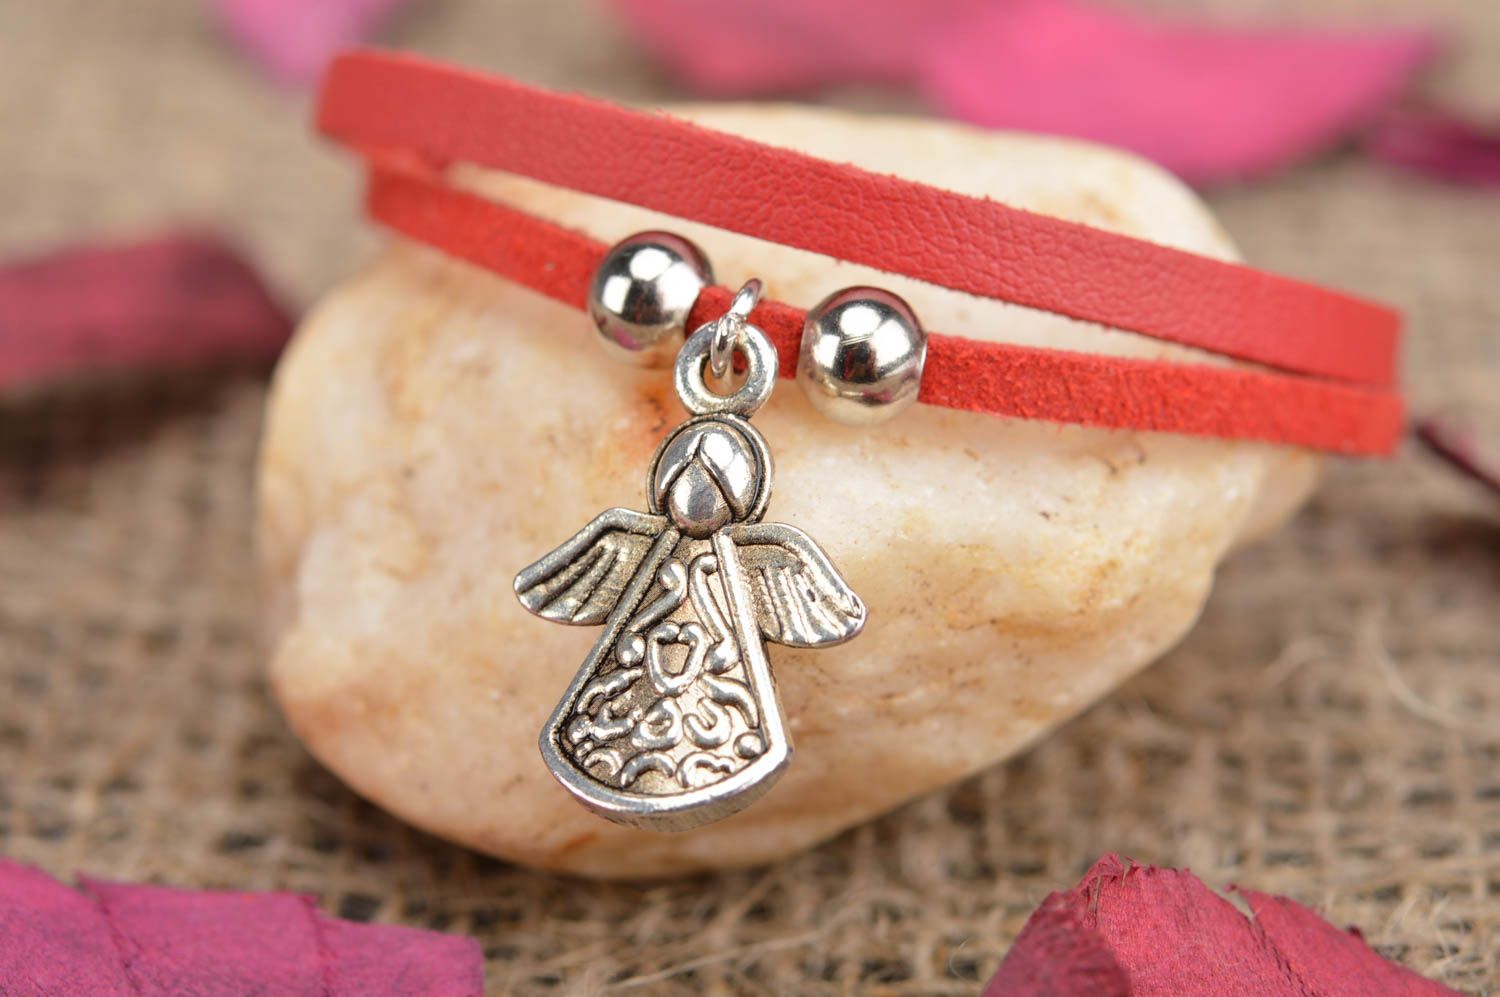 Handmade thin genuine leather red wrist bracelet with metal charm Angel for kids photo 1